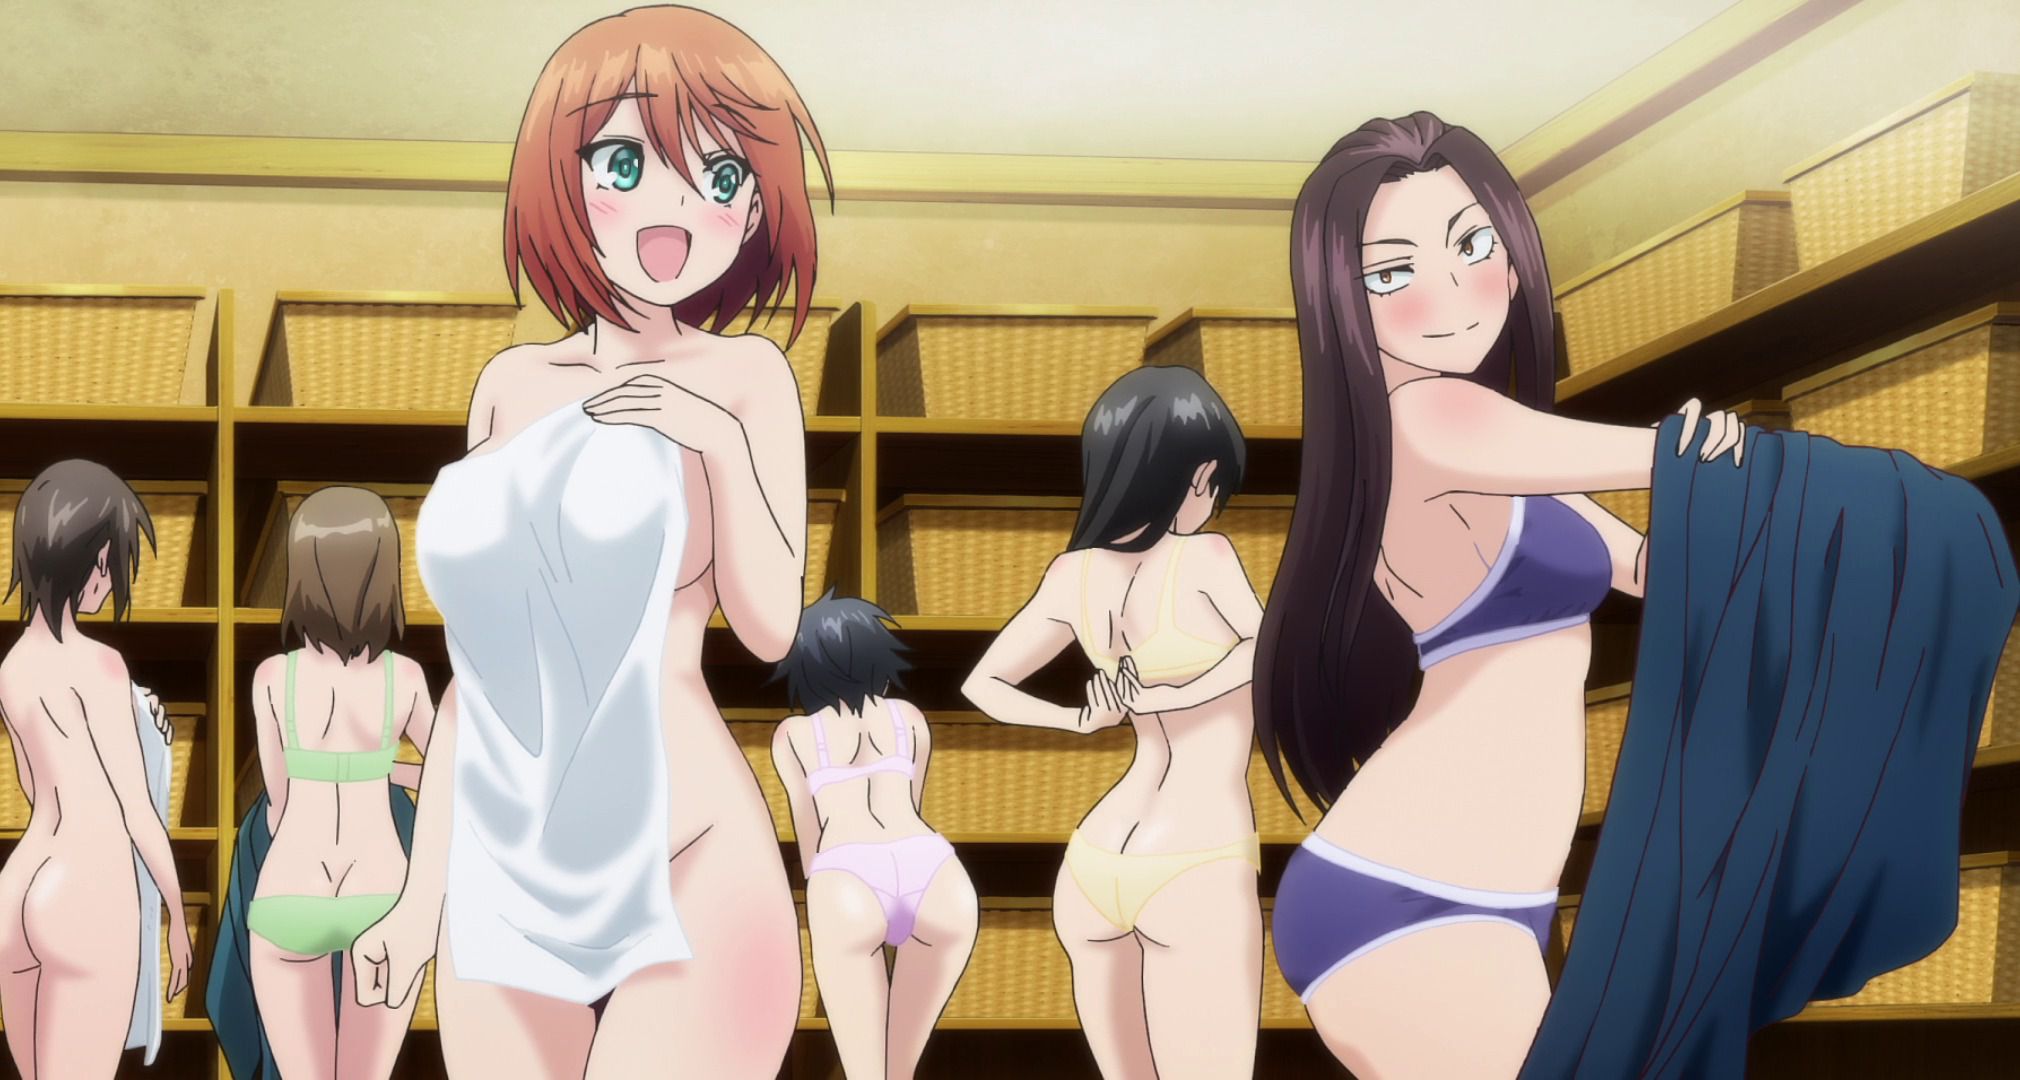 [Yuragiso's Yuna-san] erotic image summary of heroines such as Yuna-chan Part 12 37